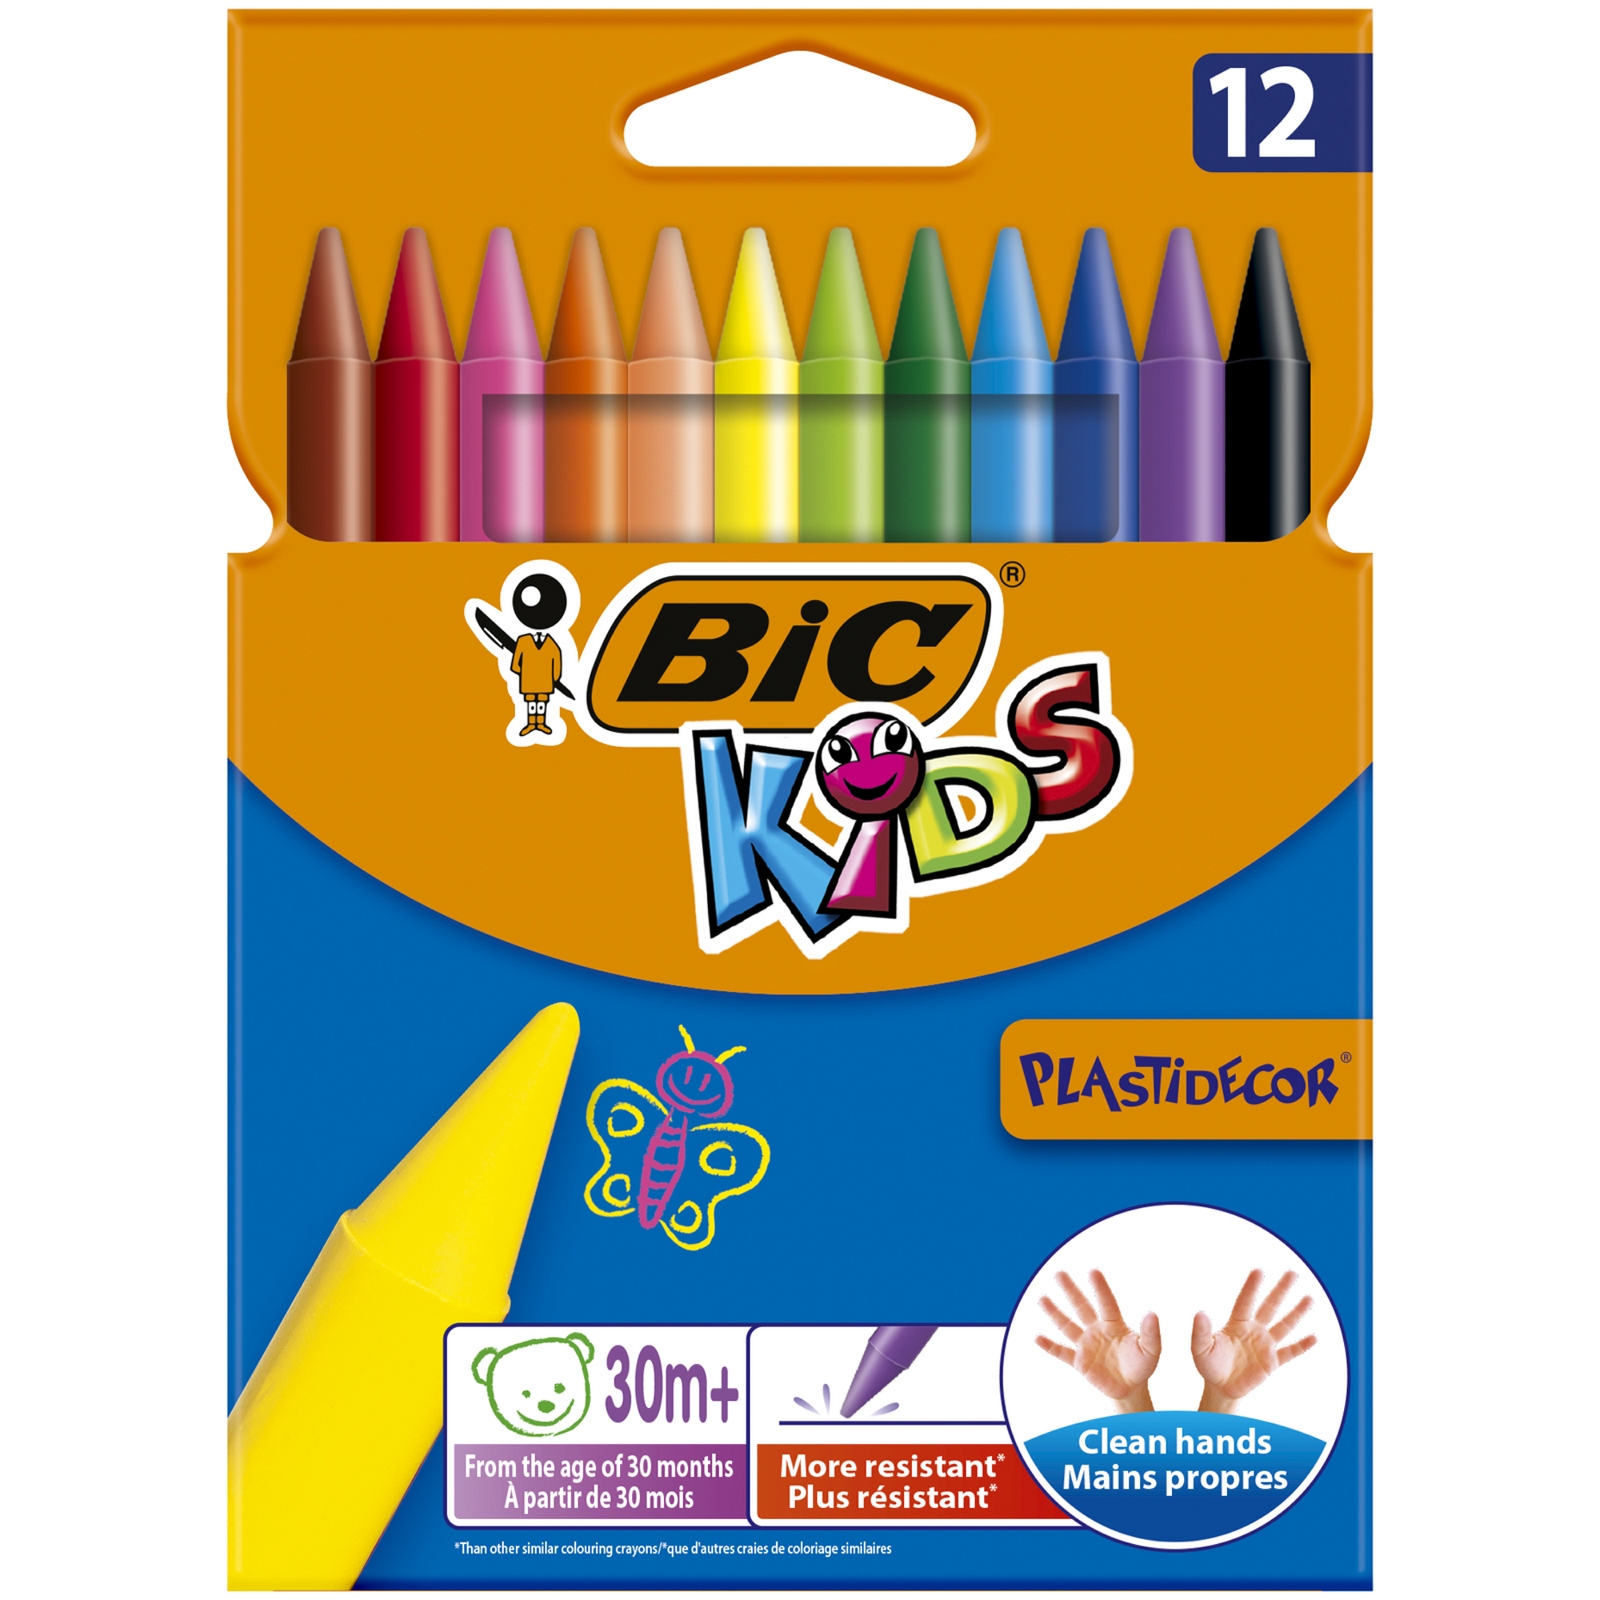 Bic Kids Plastidecor Crayons Pack of 12